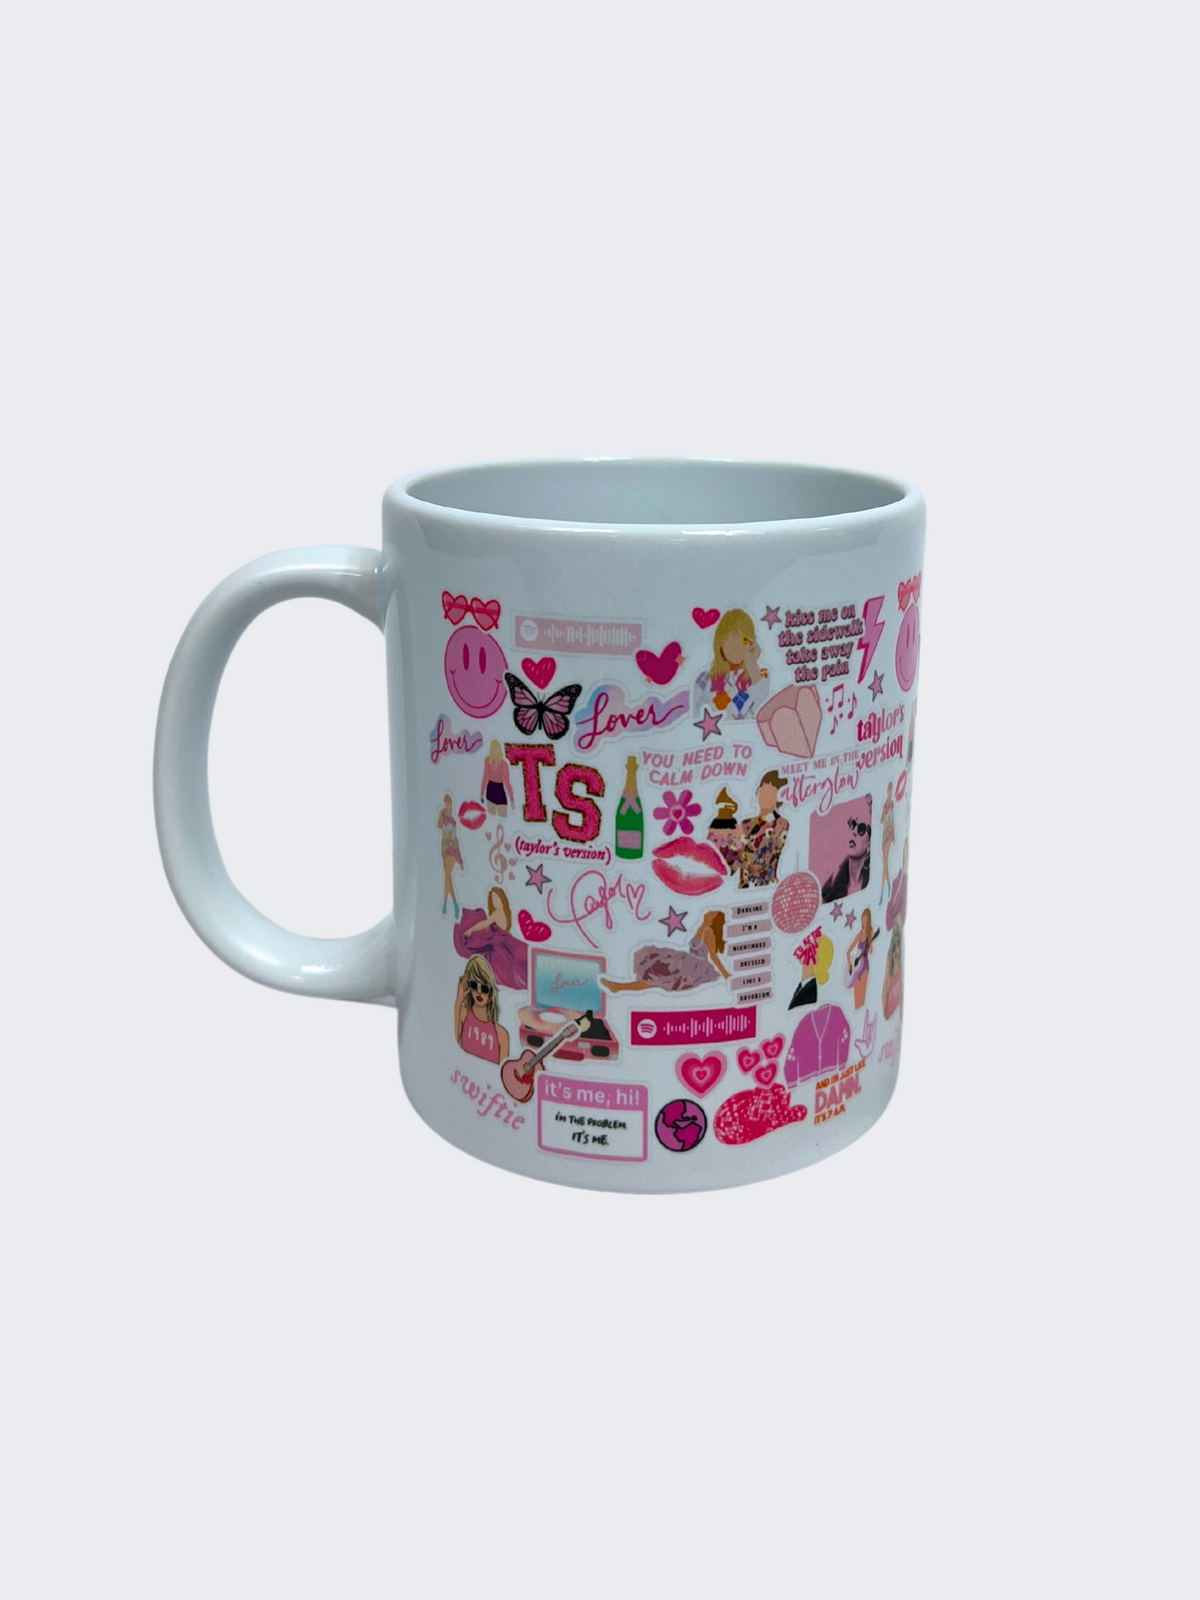 taylor swift eras pink collage coffee mug